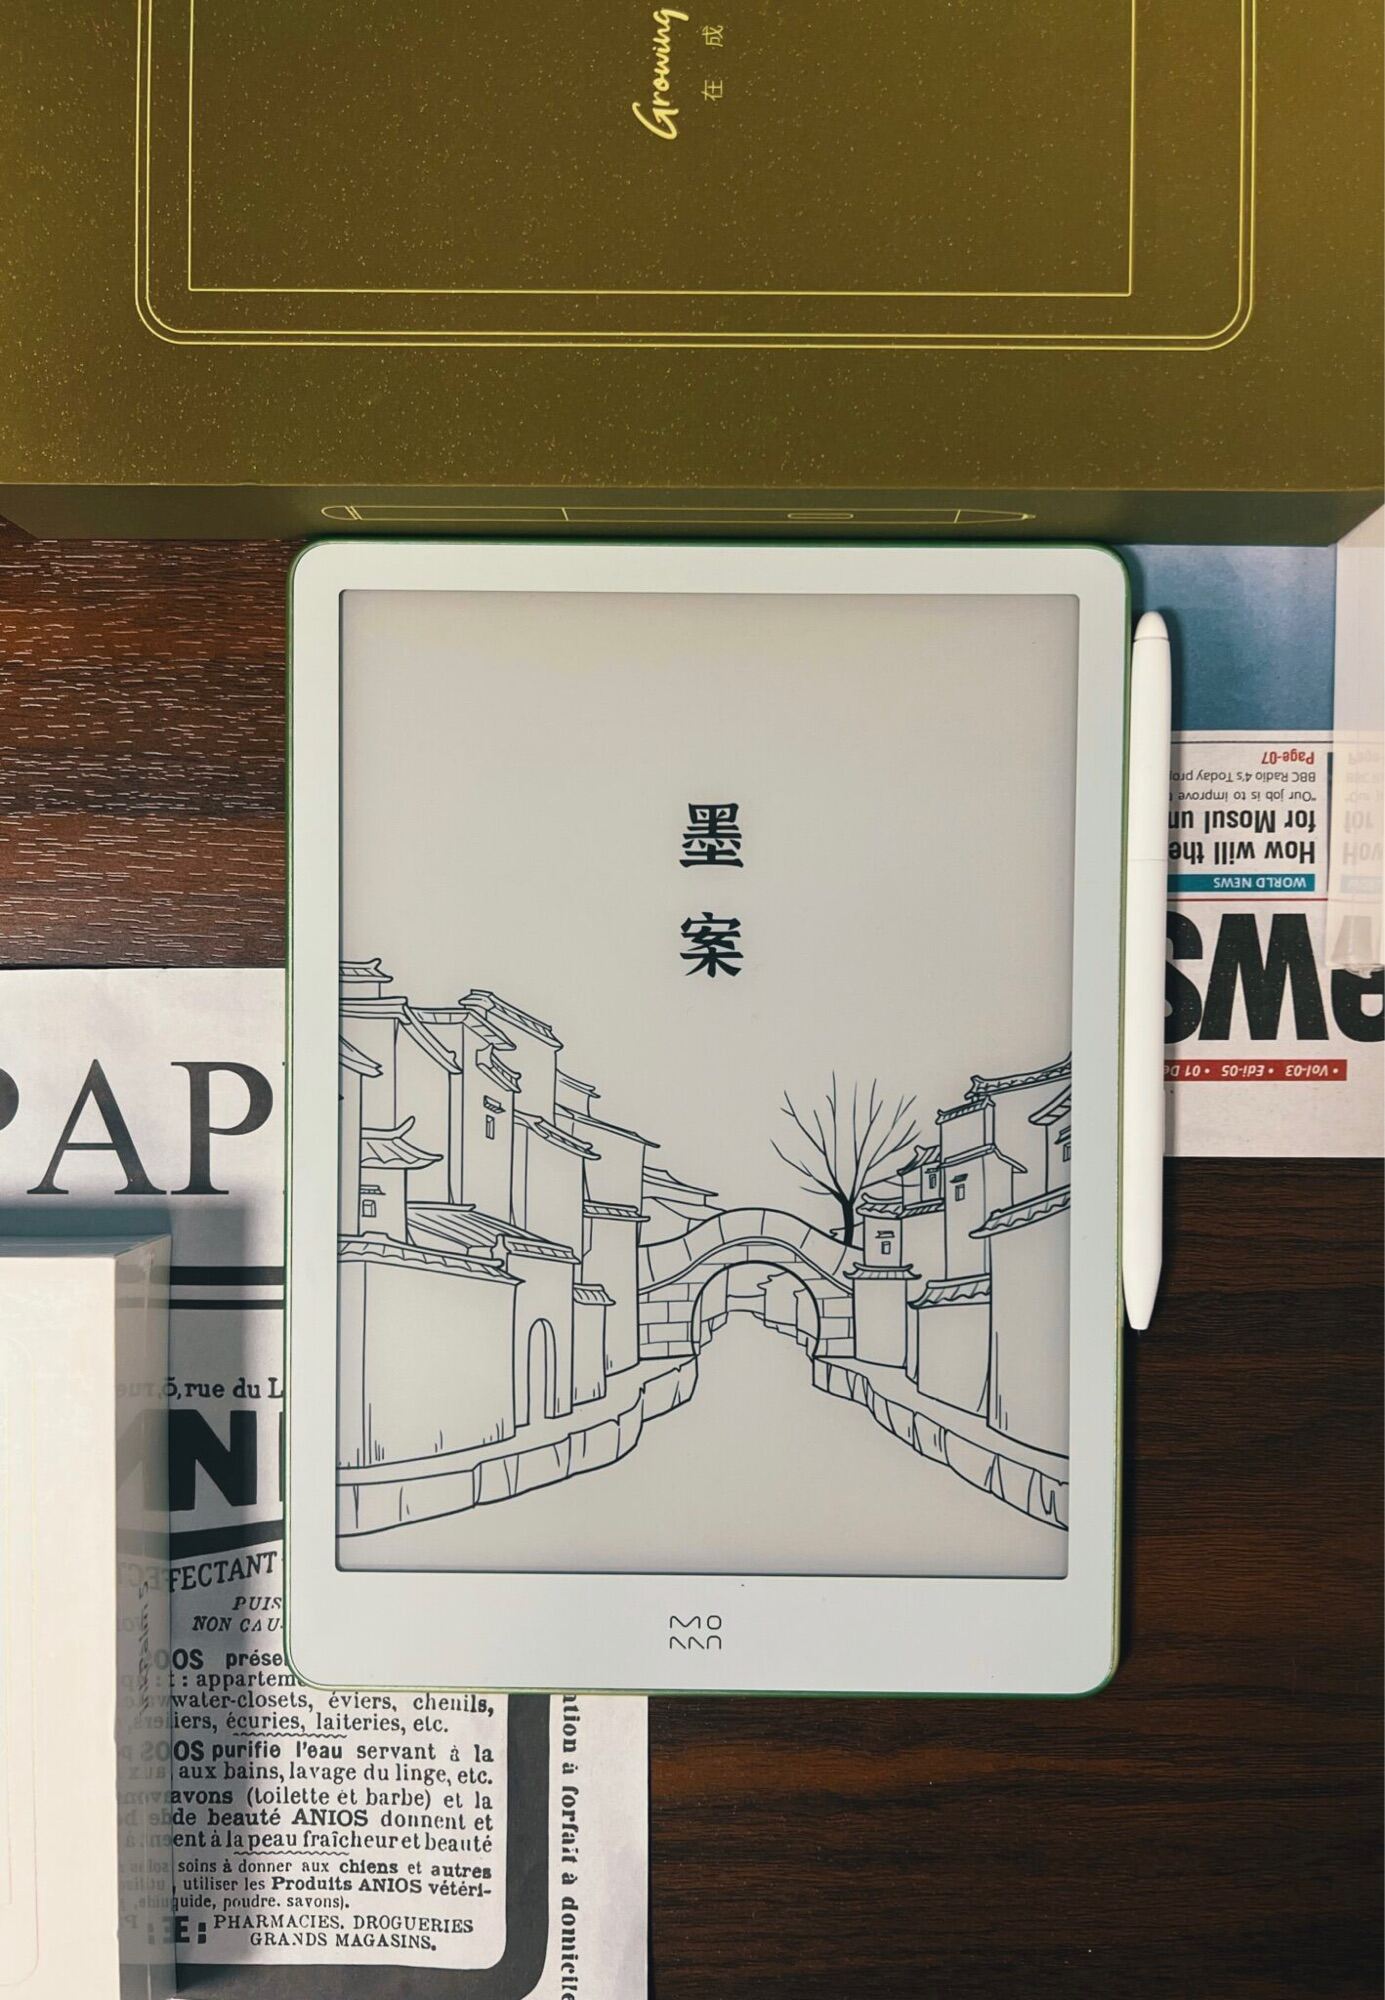 Xiaomi Moann W8 E-note with English